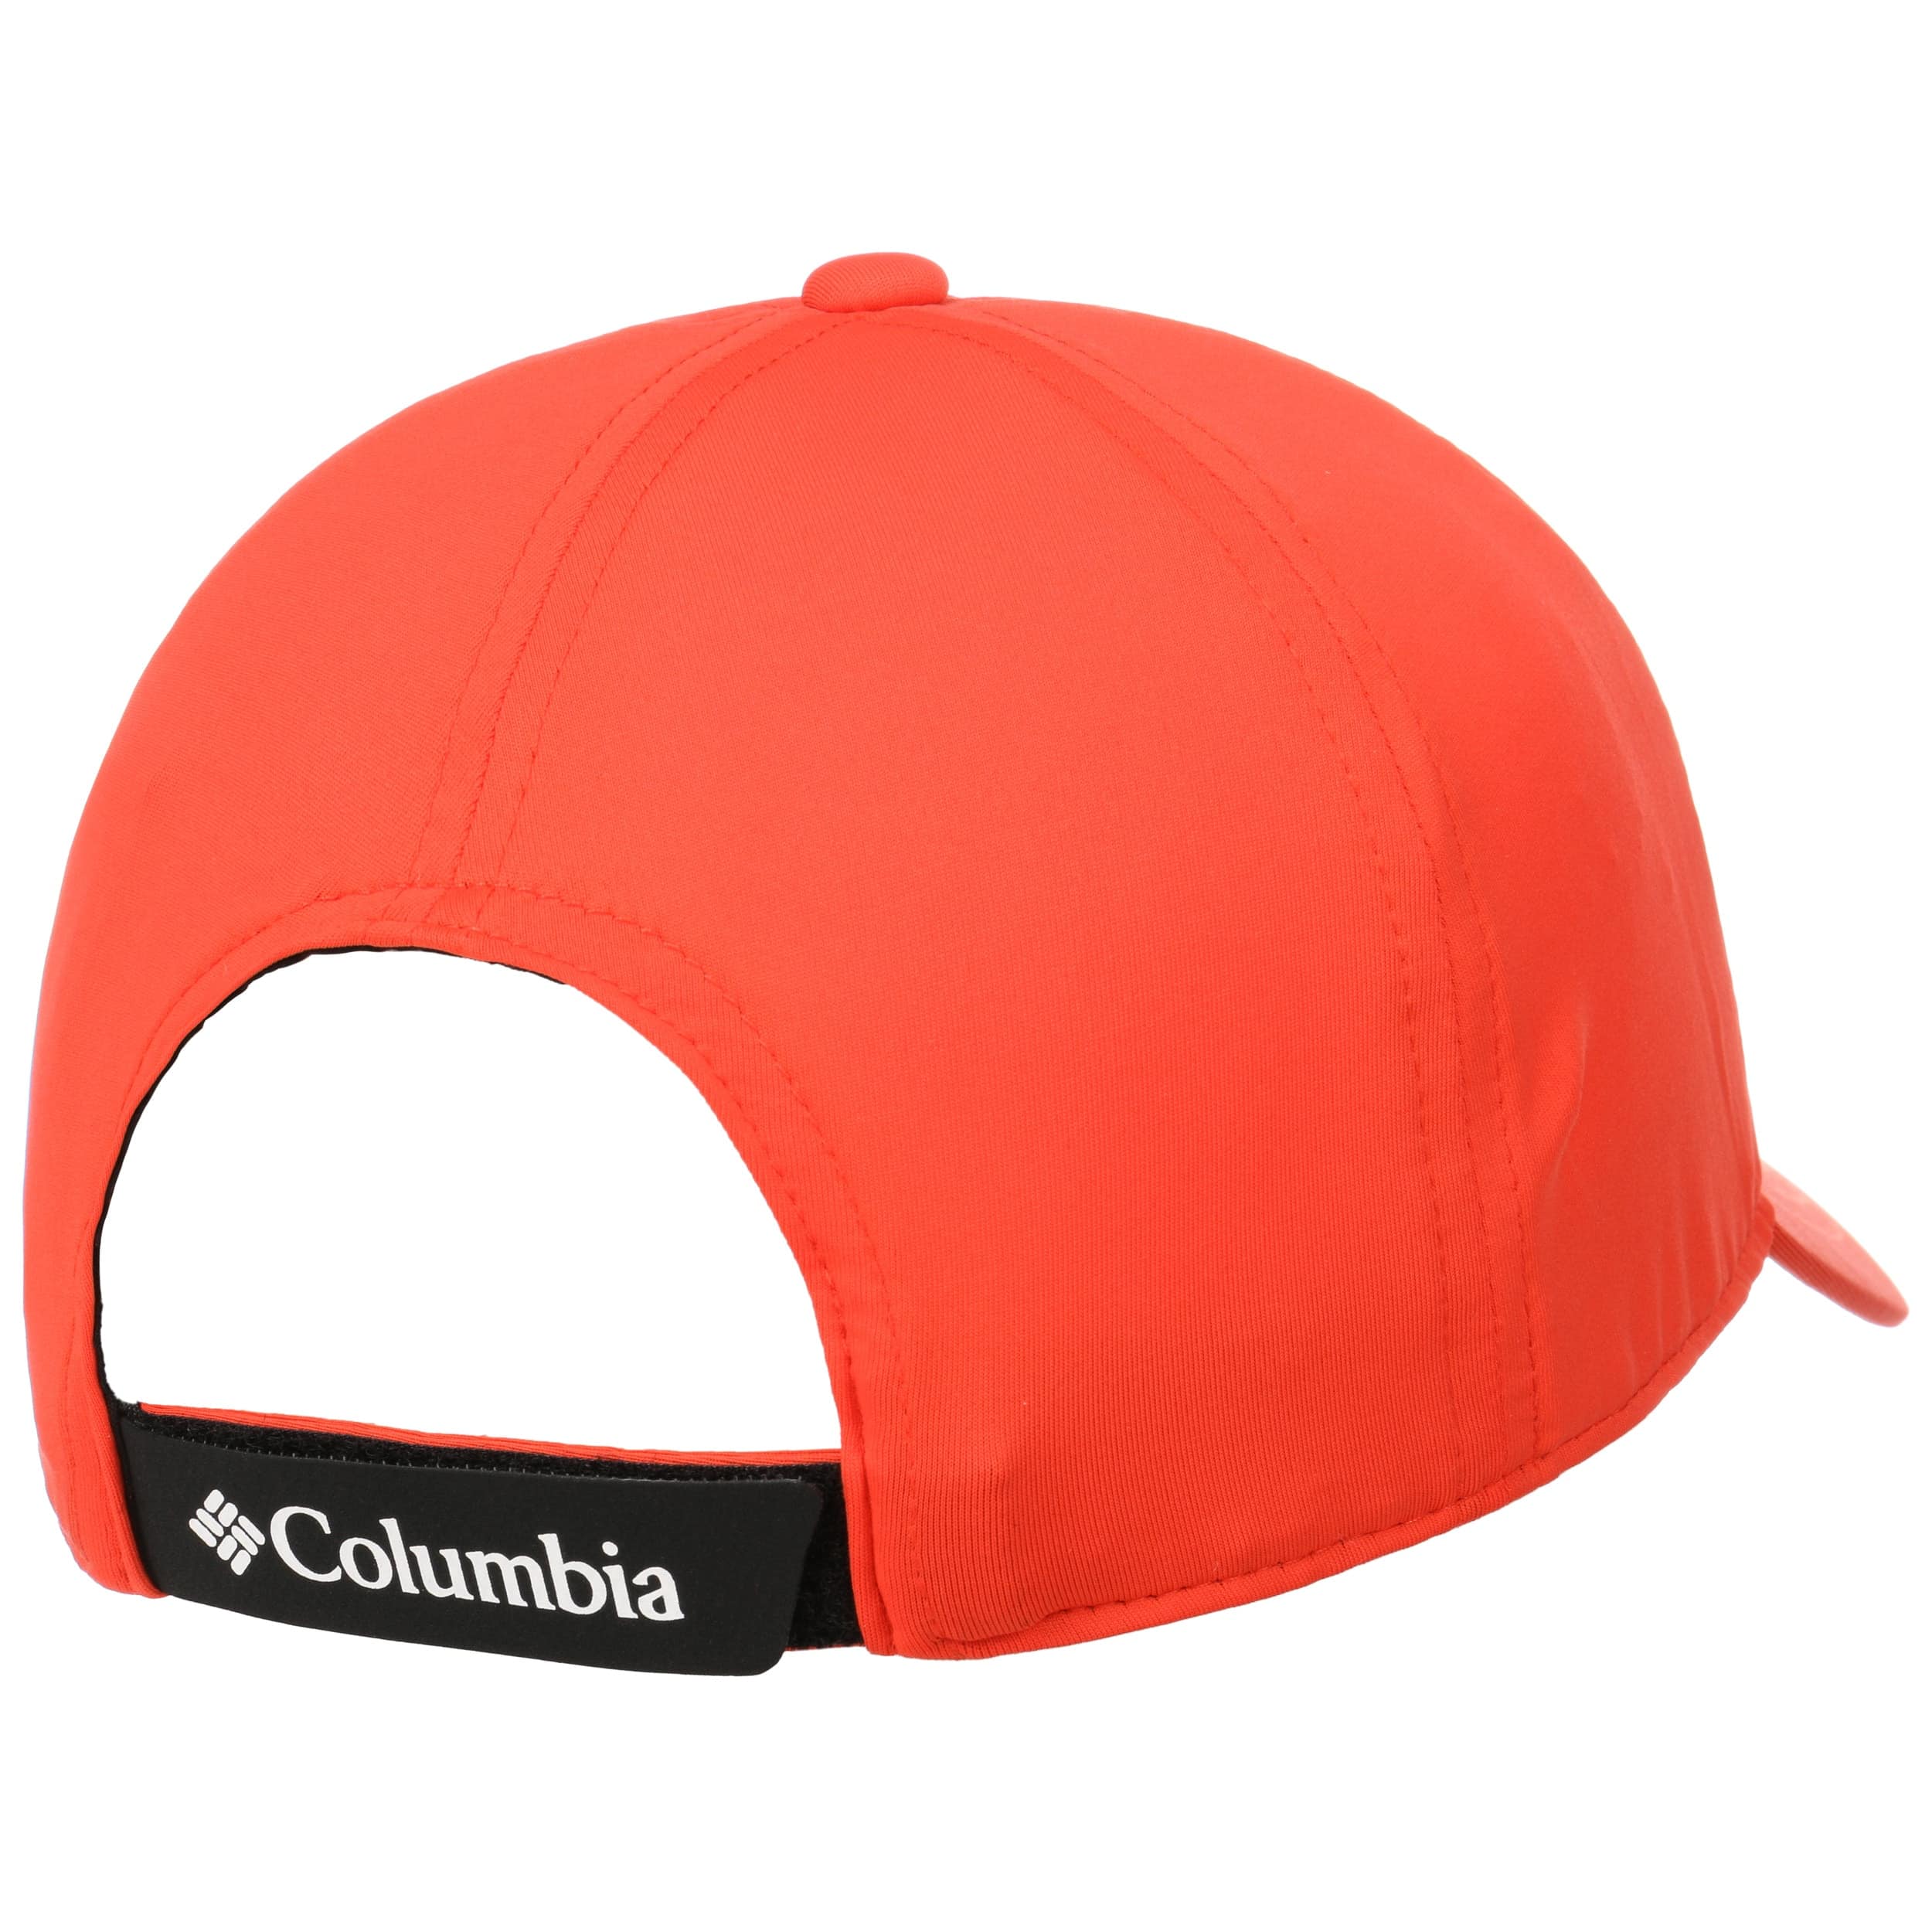 Coolhead II Strapback Cap by Columbia - 42,95 €